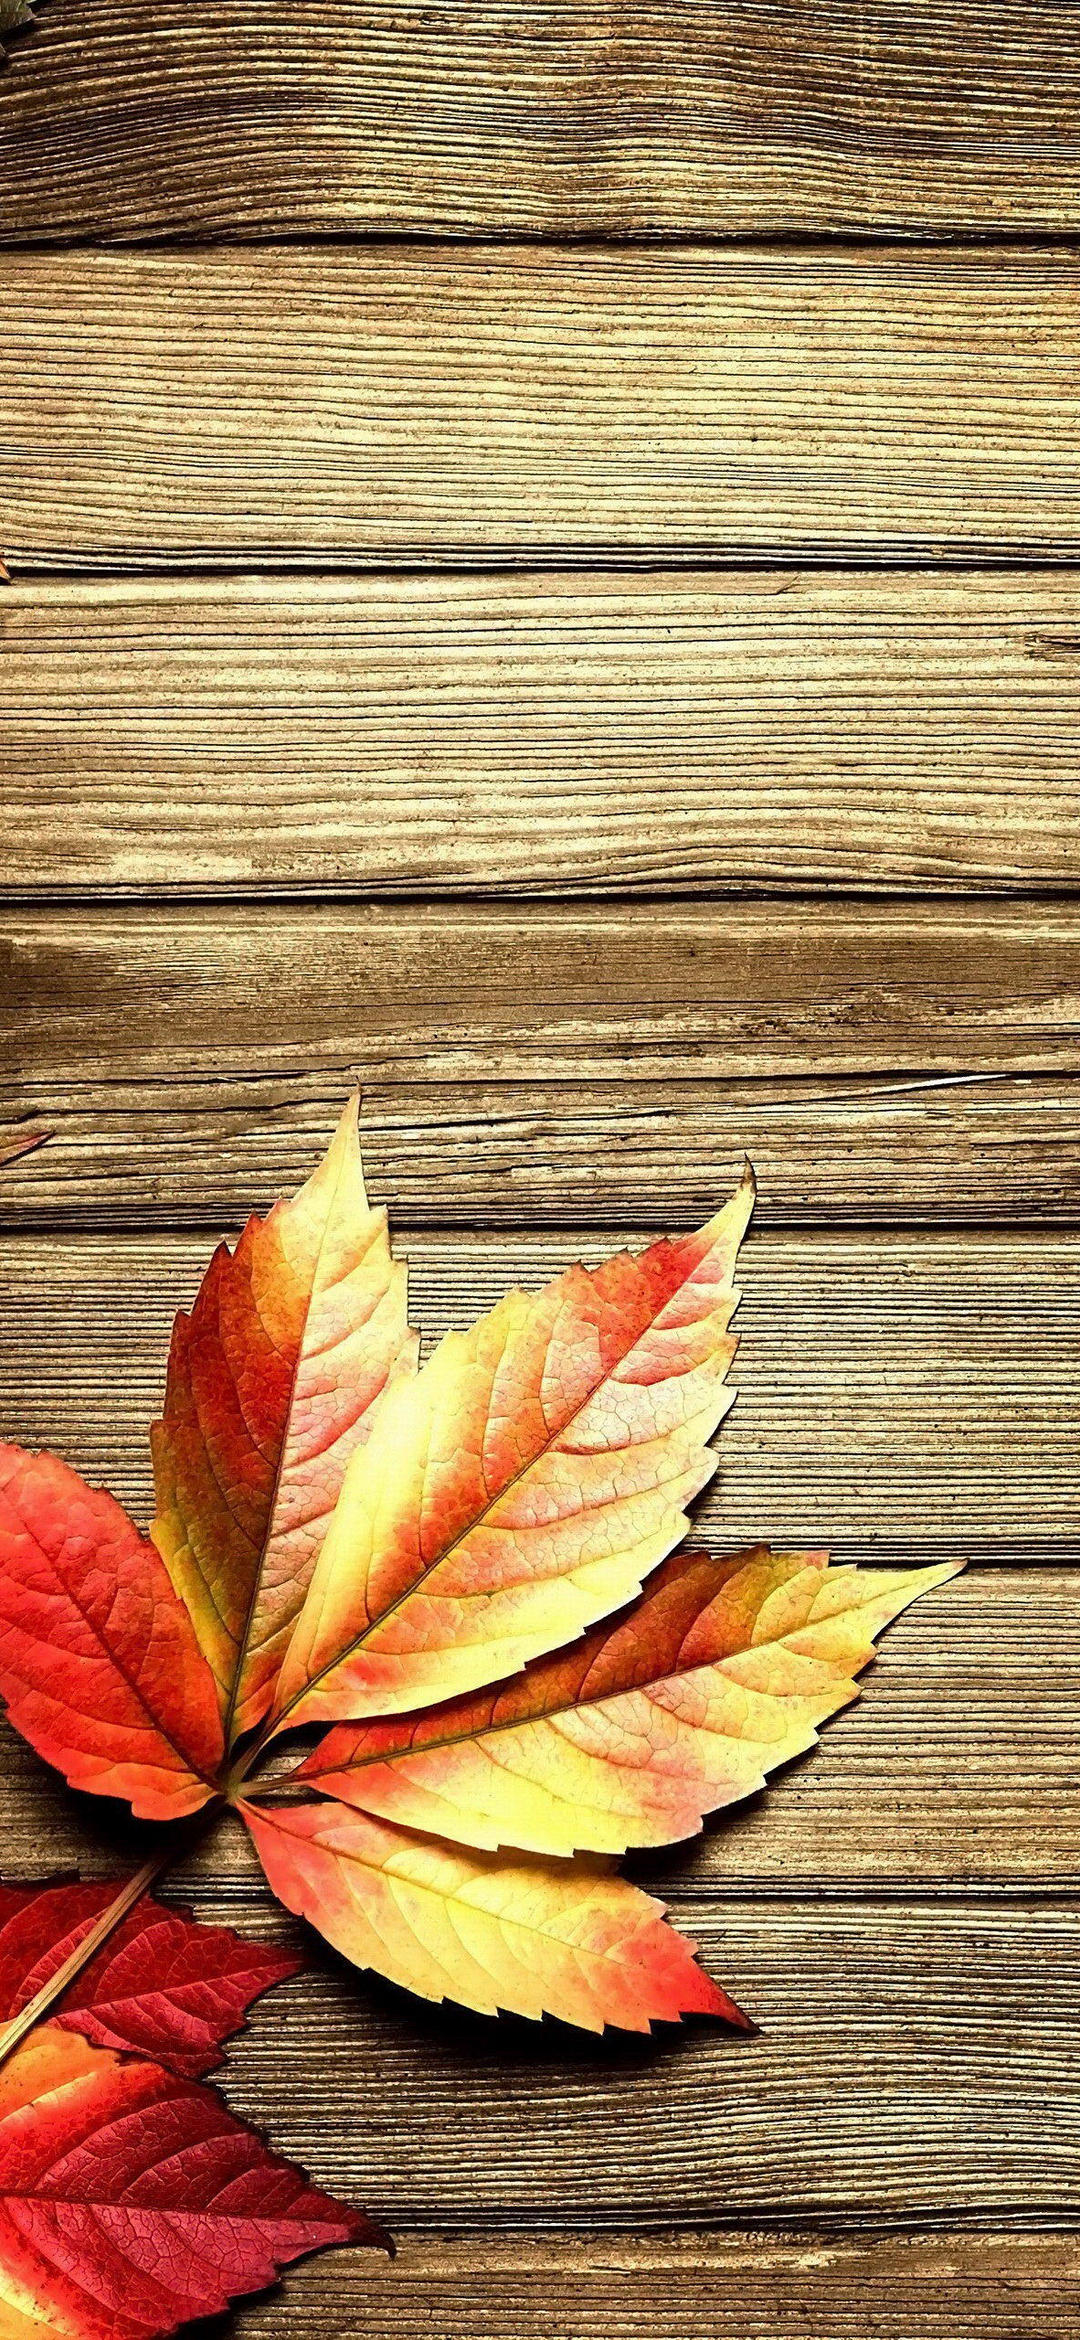 Light Brown Wooden Board And Autumn Leaves Redmagic 5 Android スマホ壁紙 待ち受け スマラン